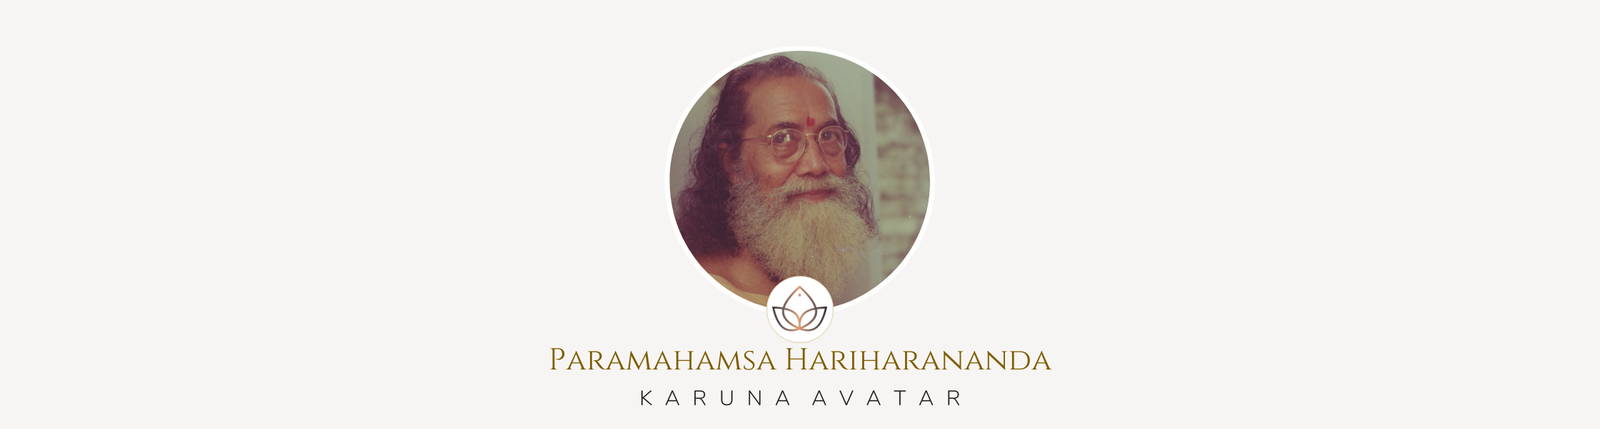 Karuna Avatar Paramahamsa Hariharananda